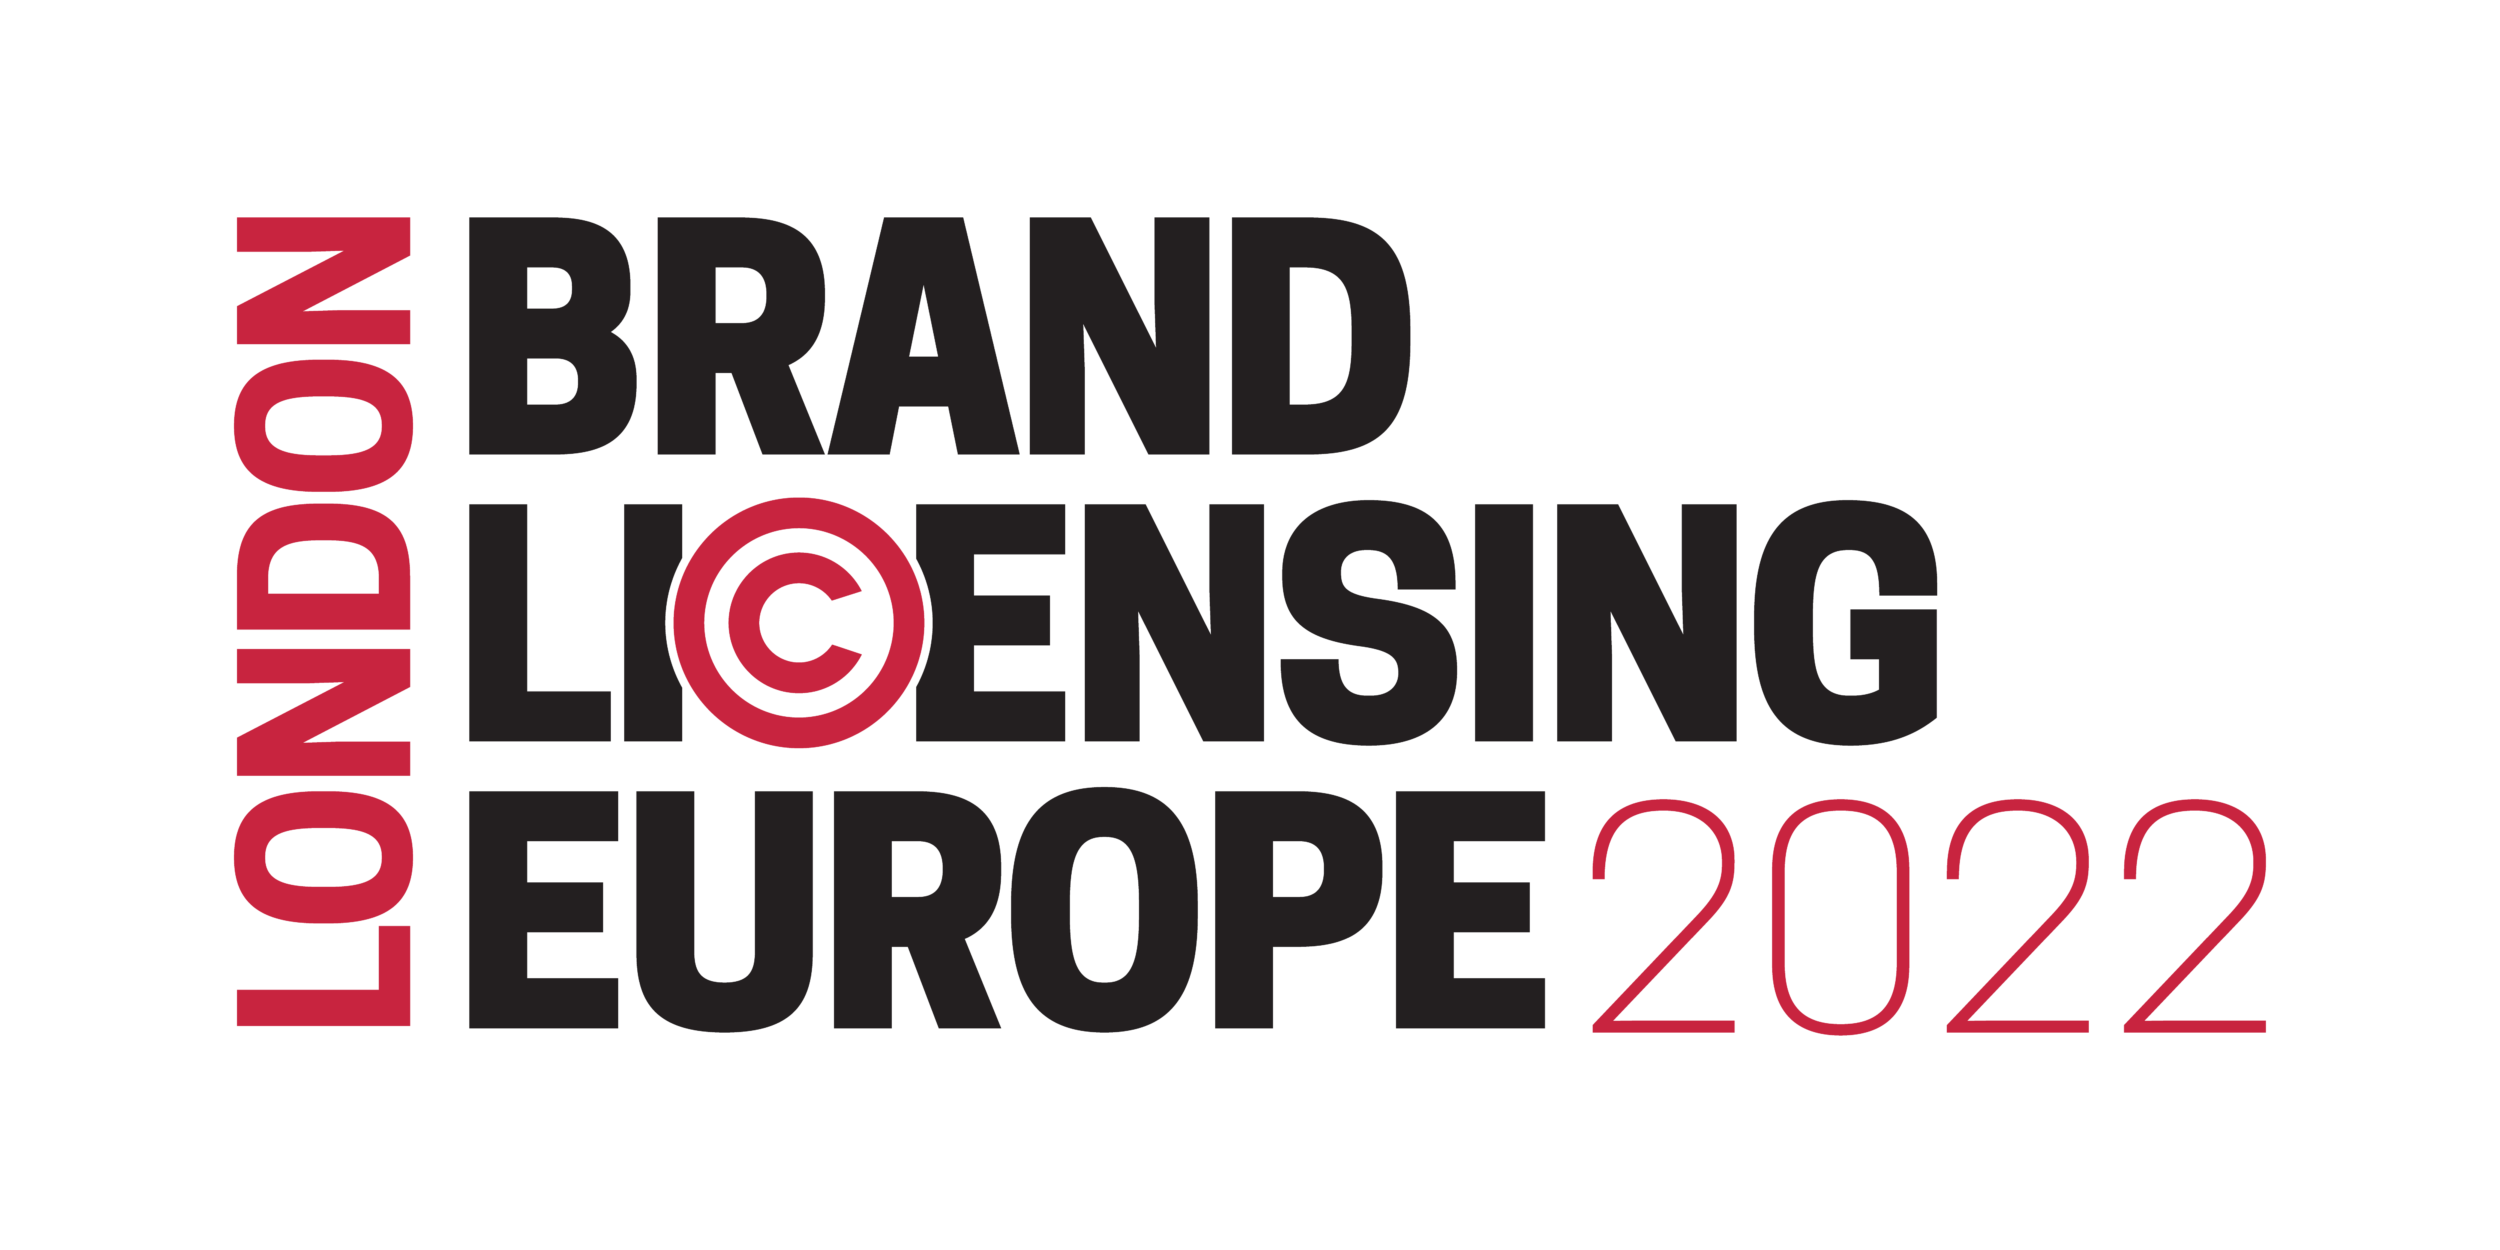 Brand Licensing Europe 2024